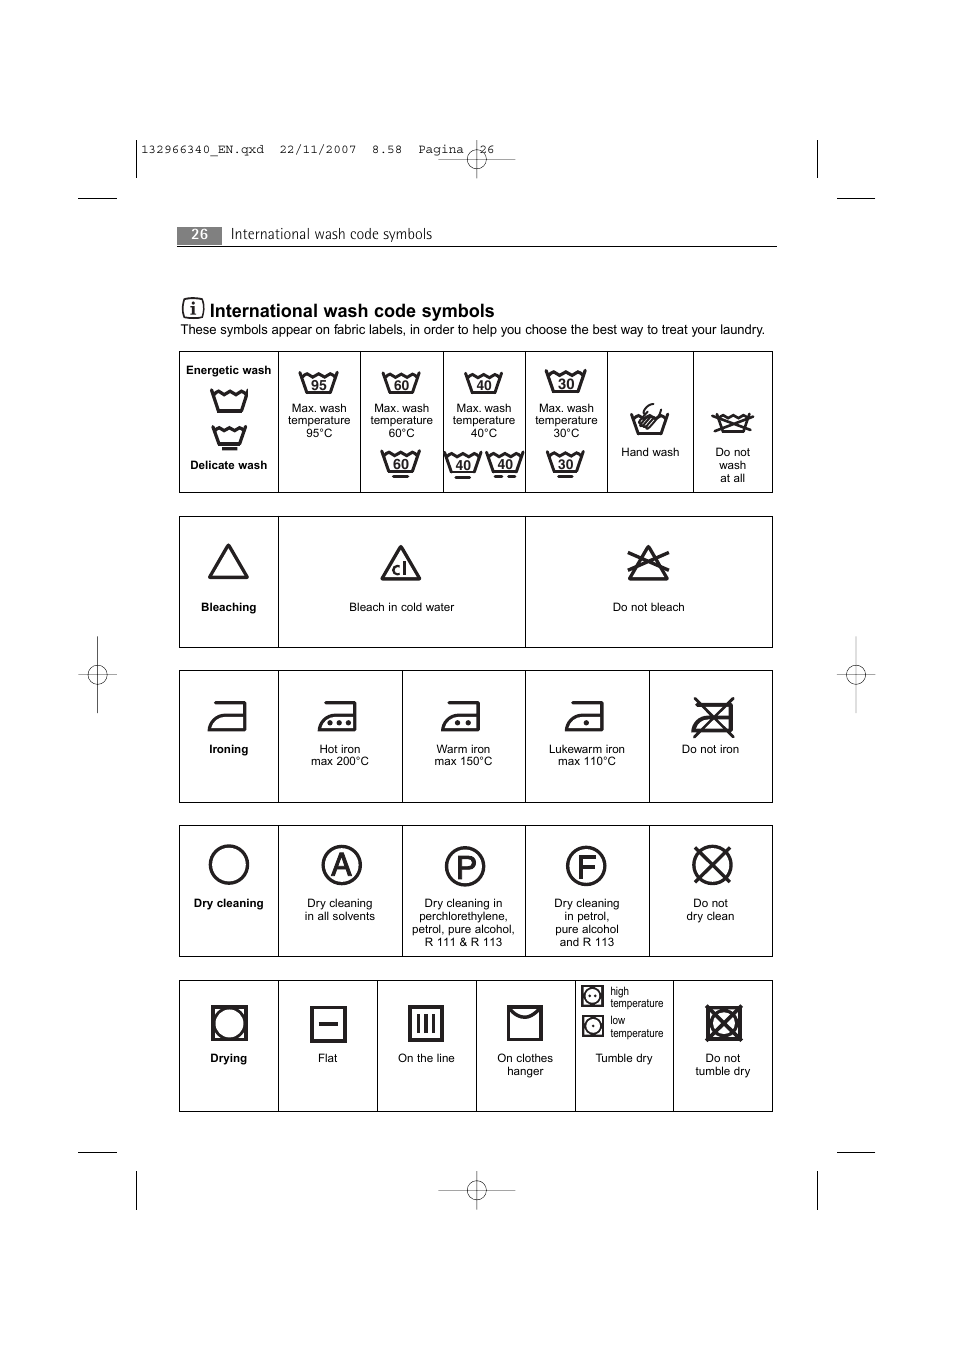 International wash code symbols, 26 international wash code symbols | AEG  LAVAMAT PRINCESS 2252 F User Manual | Page 26 / 44 | Original mode